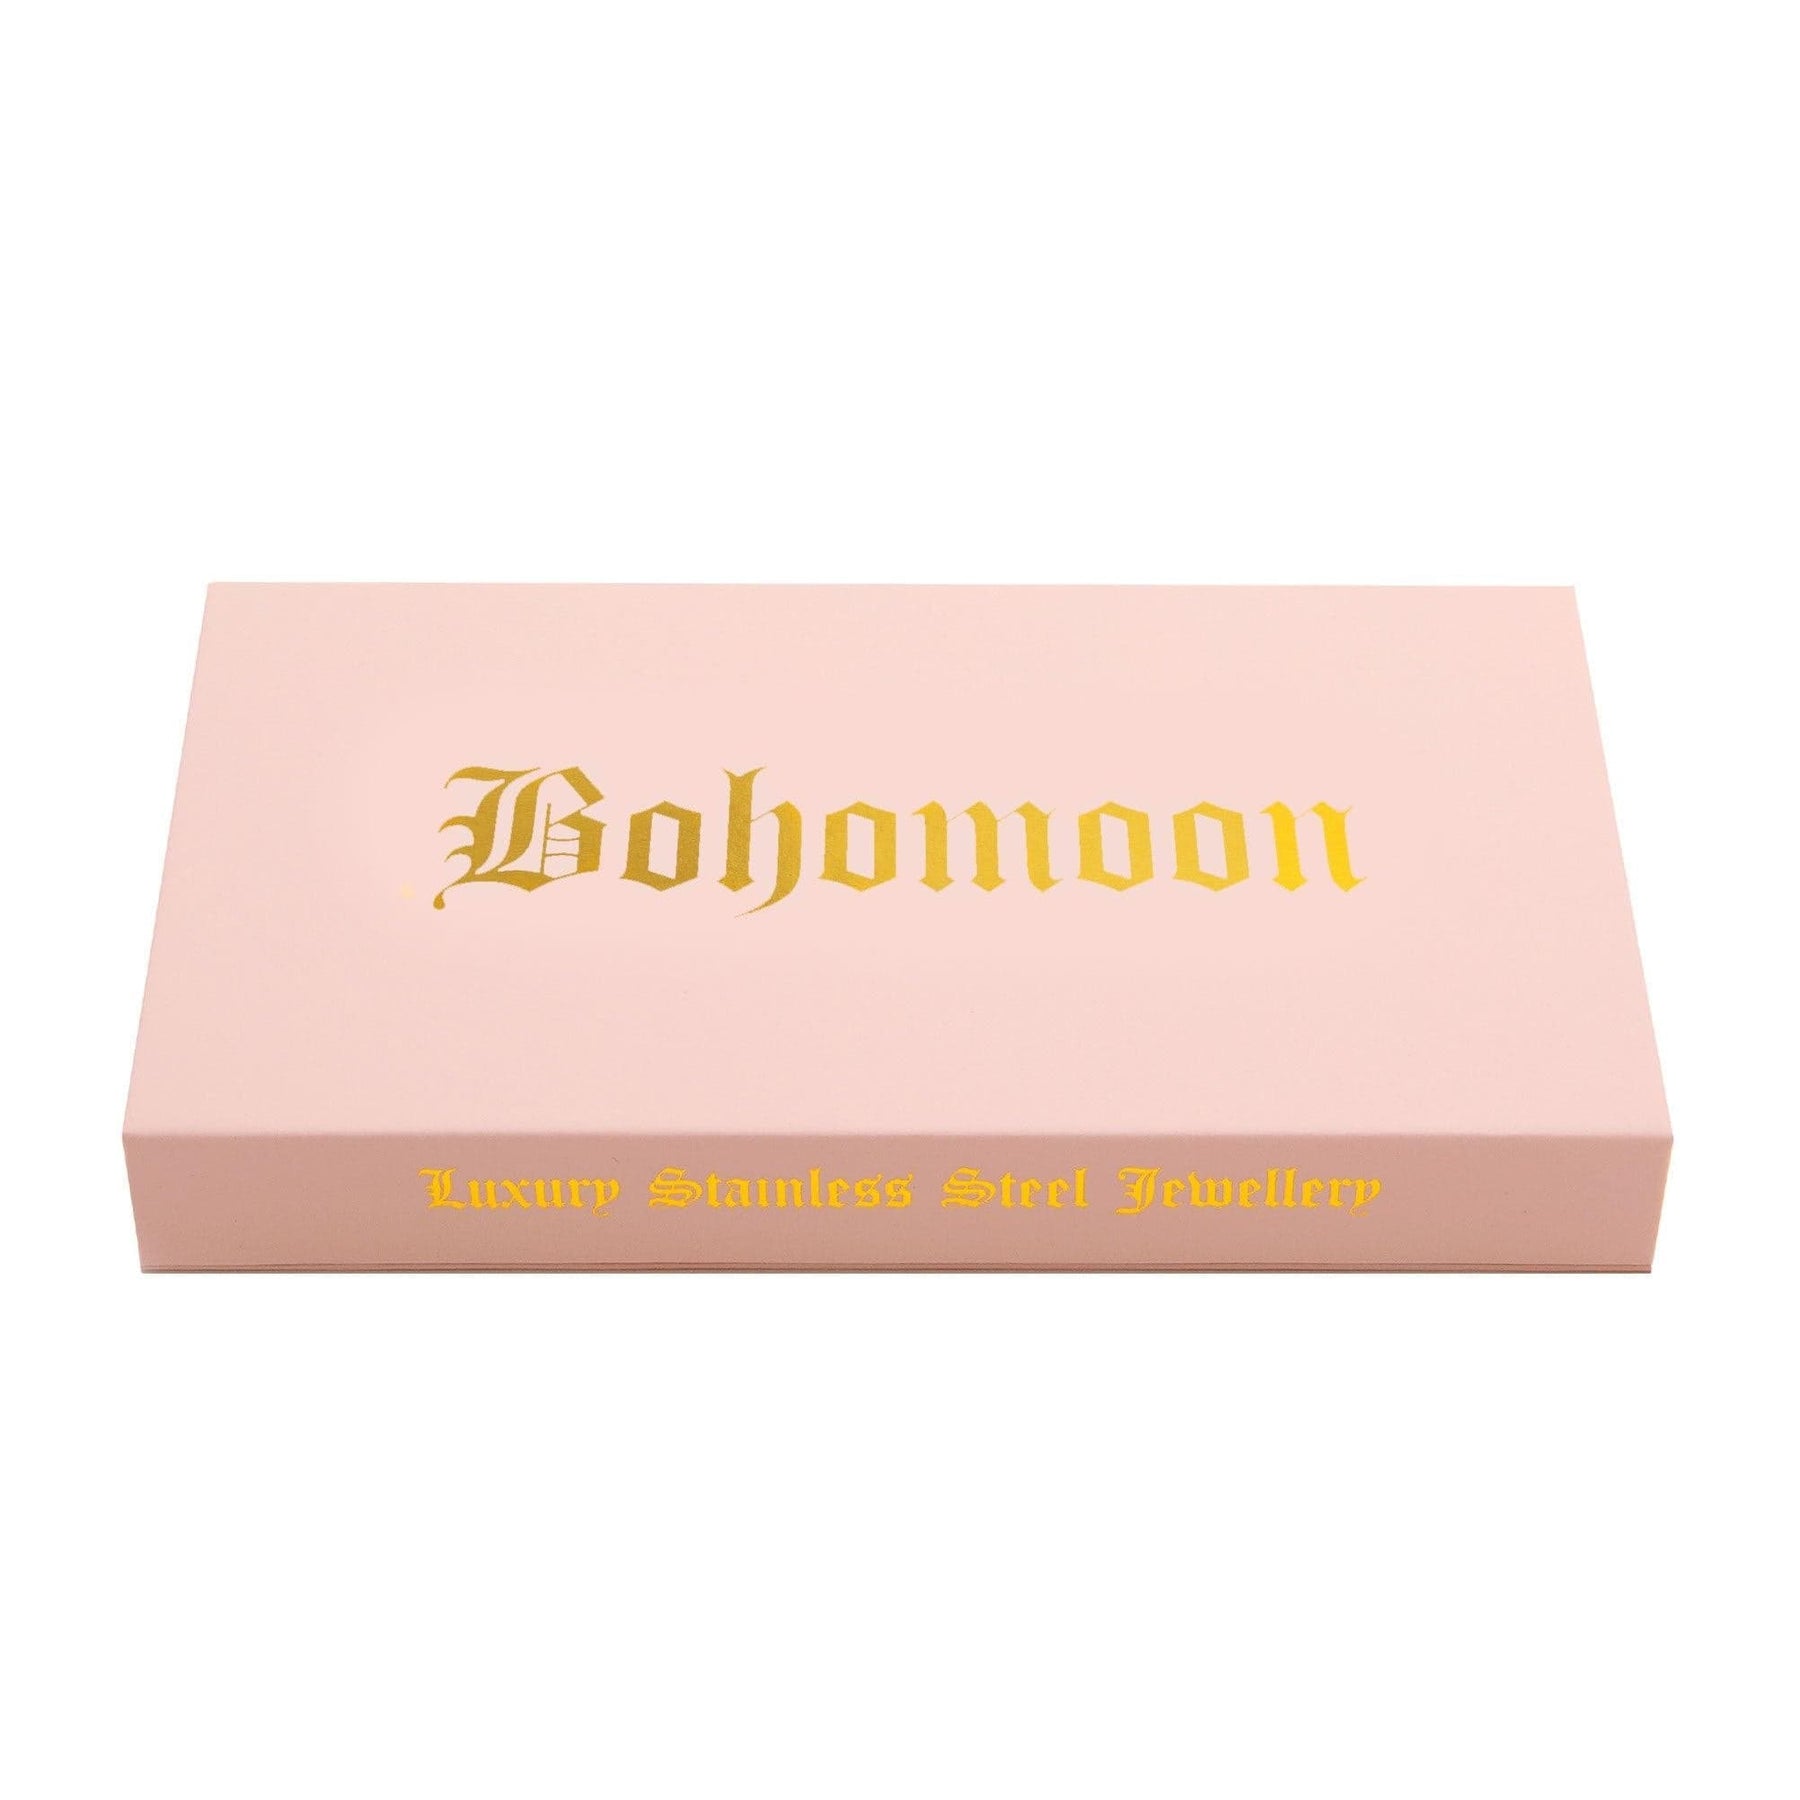 BOHOMOON Stainless Steel Bohomoon Magnetic Gift Box